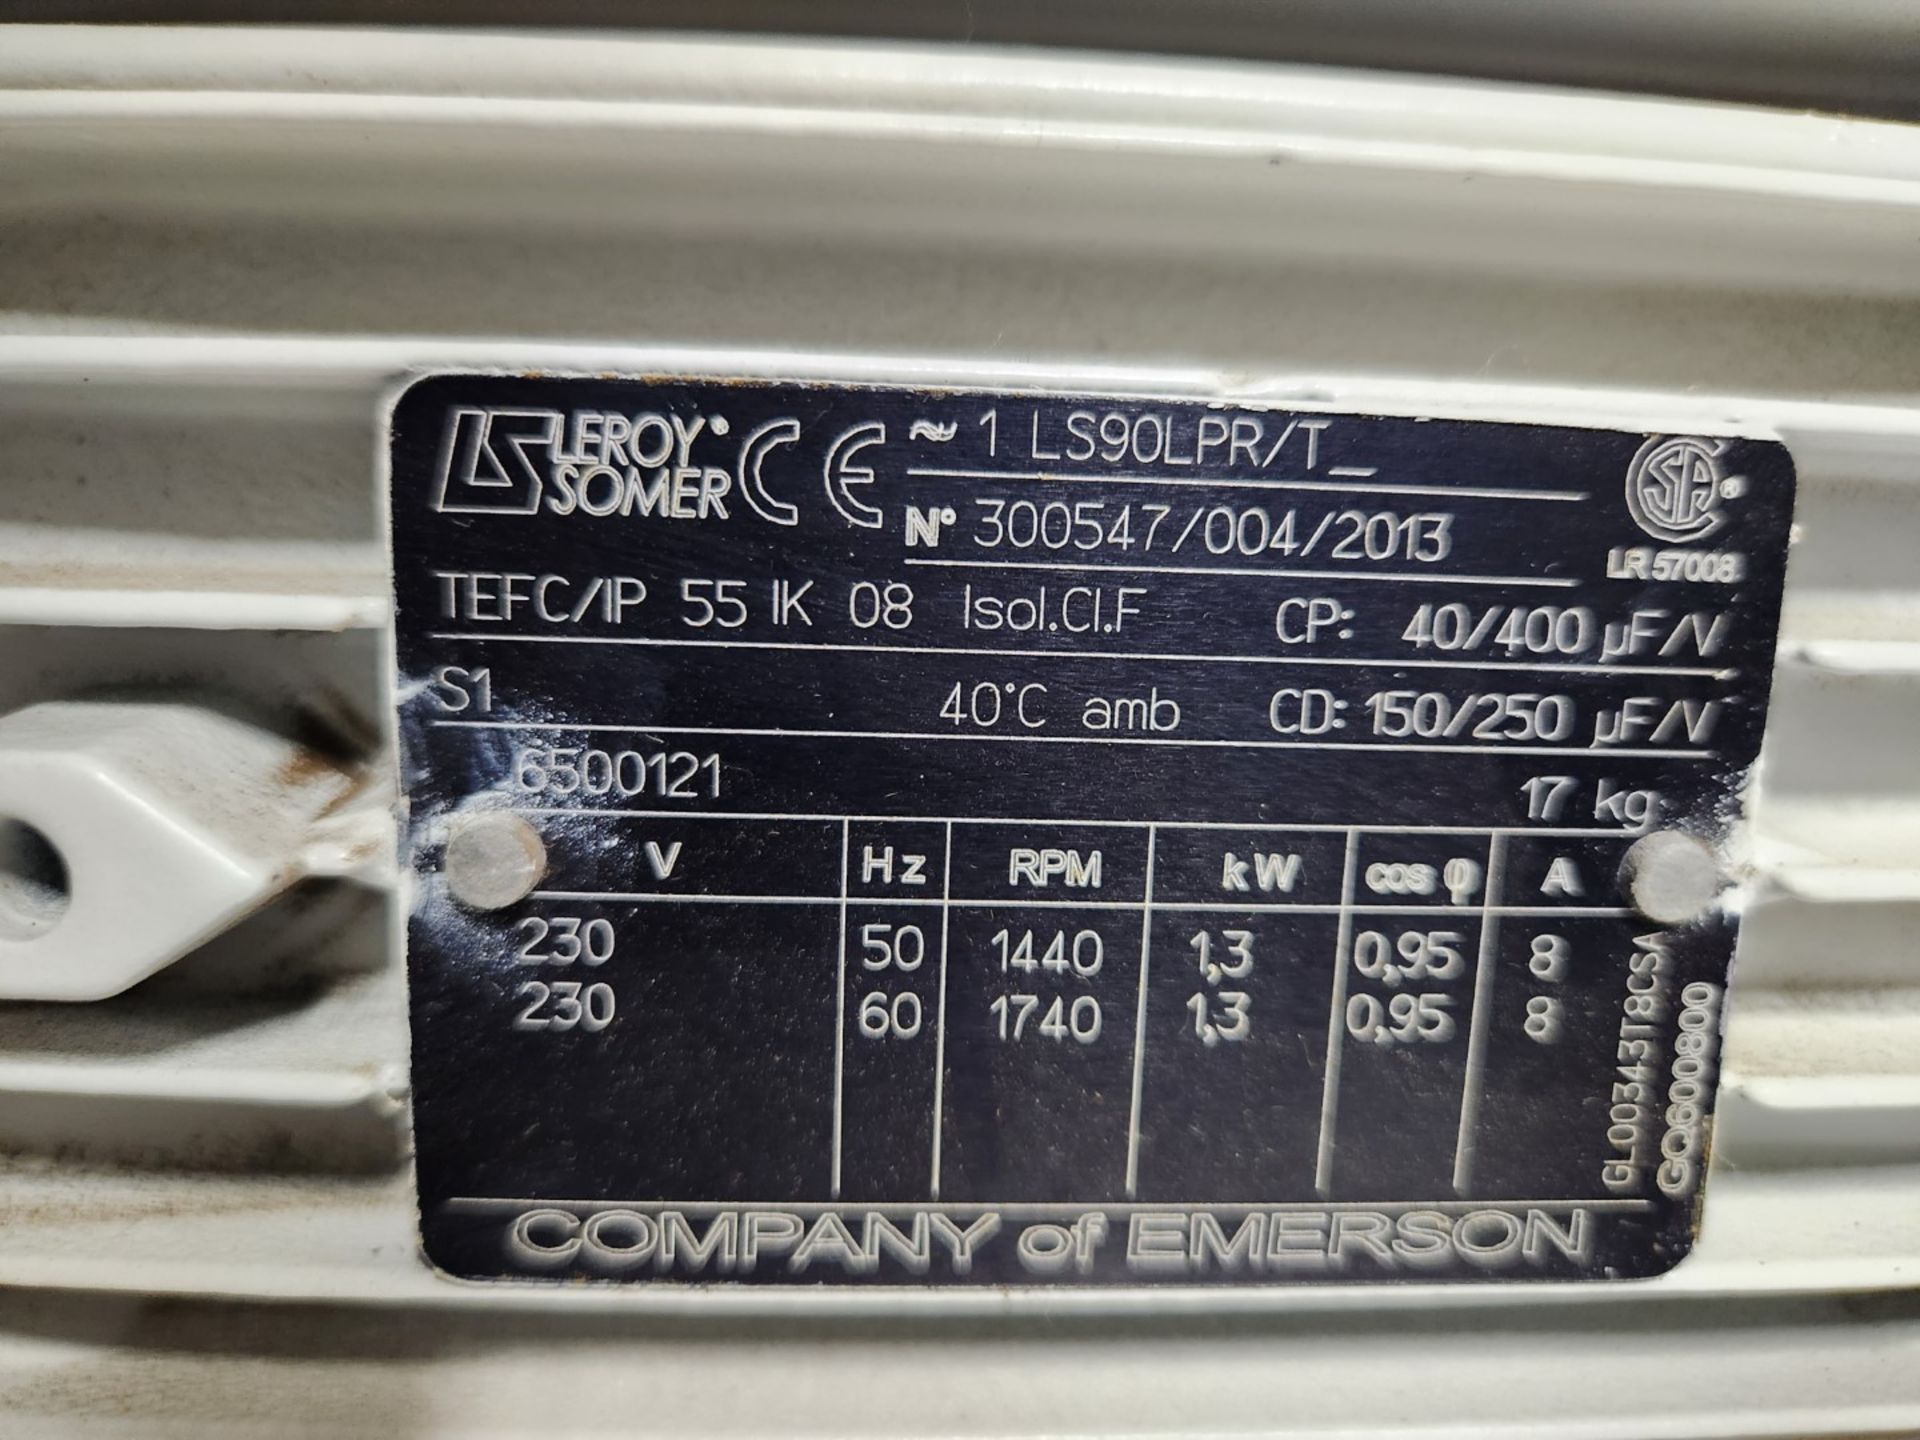 Sogevac 1.3 kW (1.75 hp) vaccum pump, model SV40 BIFC960365V2016, 230 volts, serial# 31000807481, - Image 6 of 7